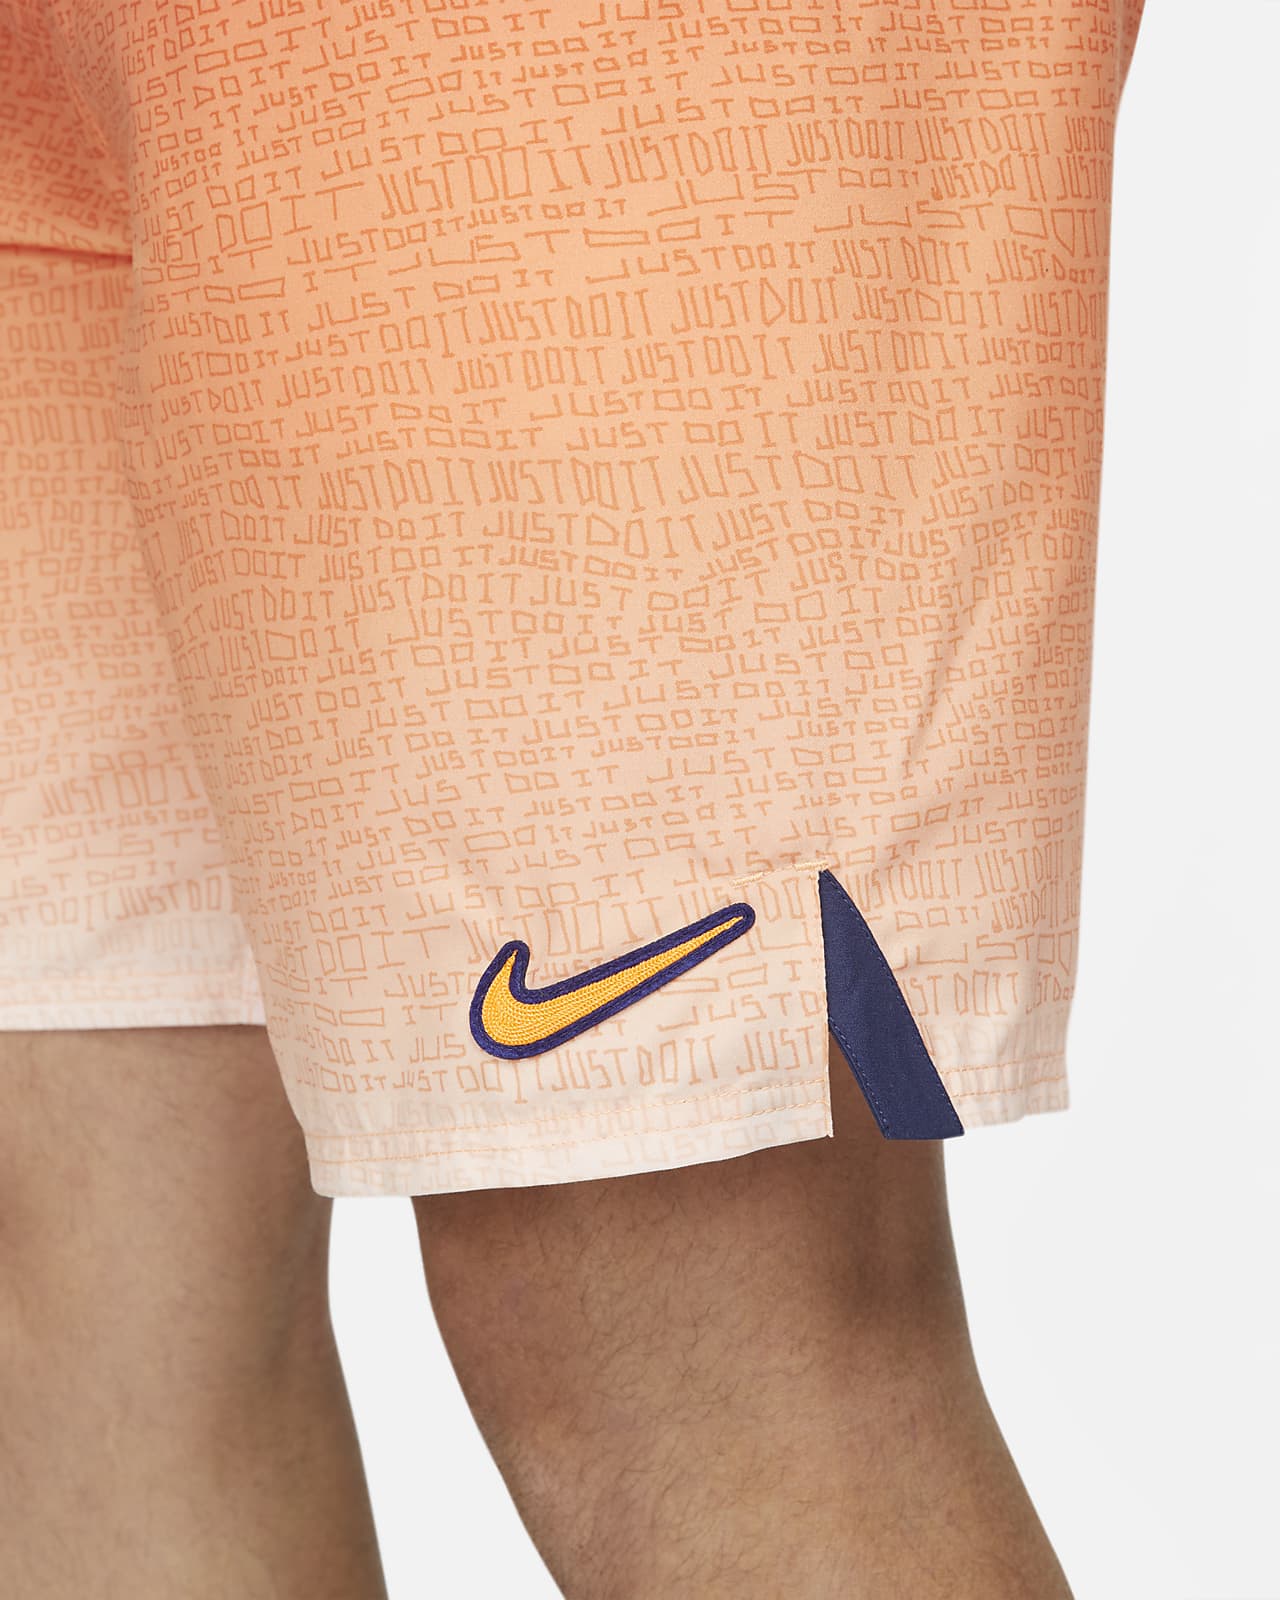 Short Nike Sportswear Vert Printemps pour Homme - DM6829-363